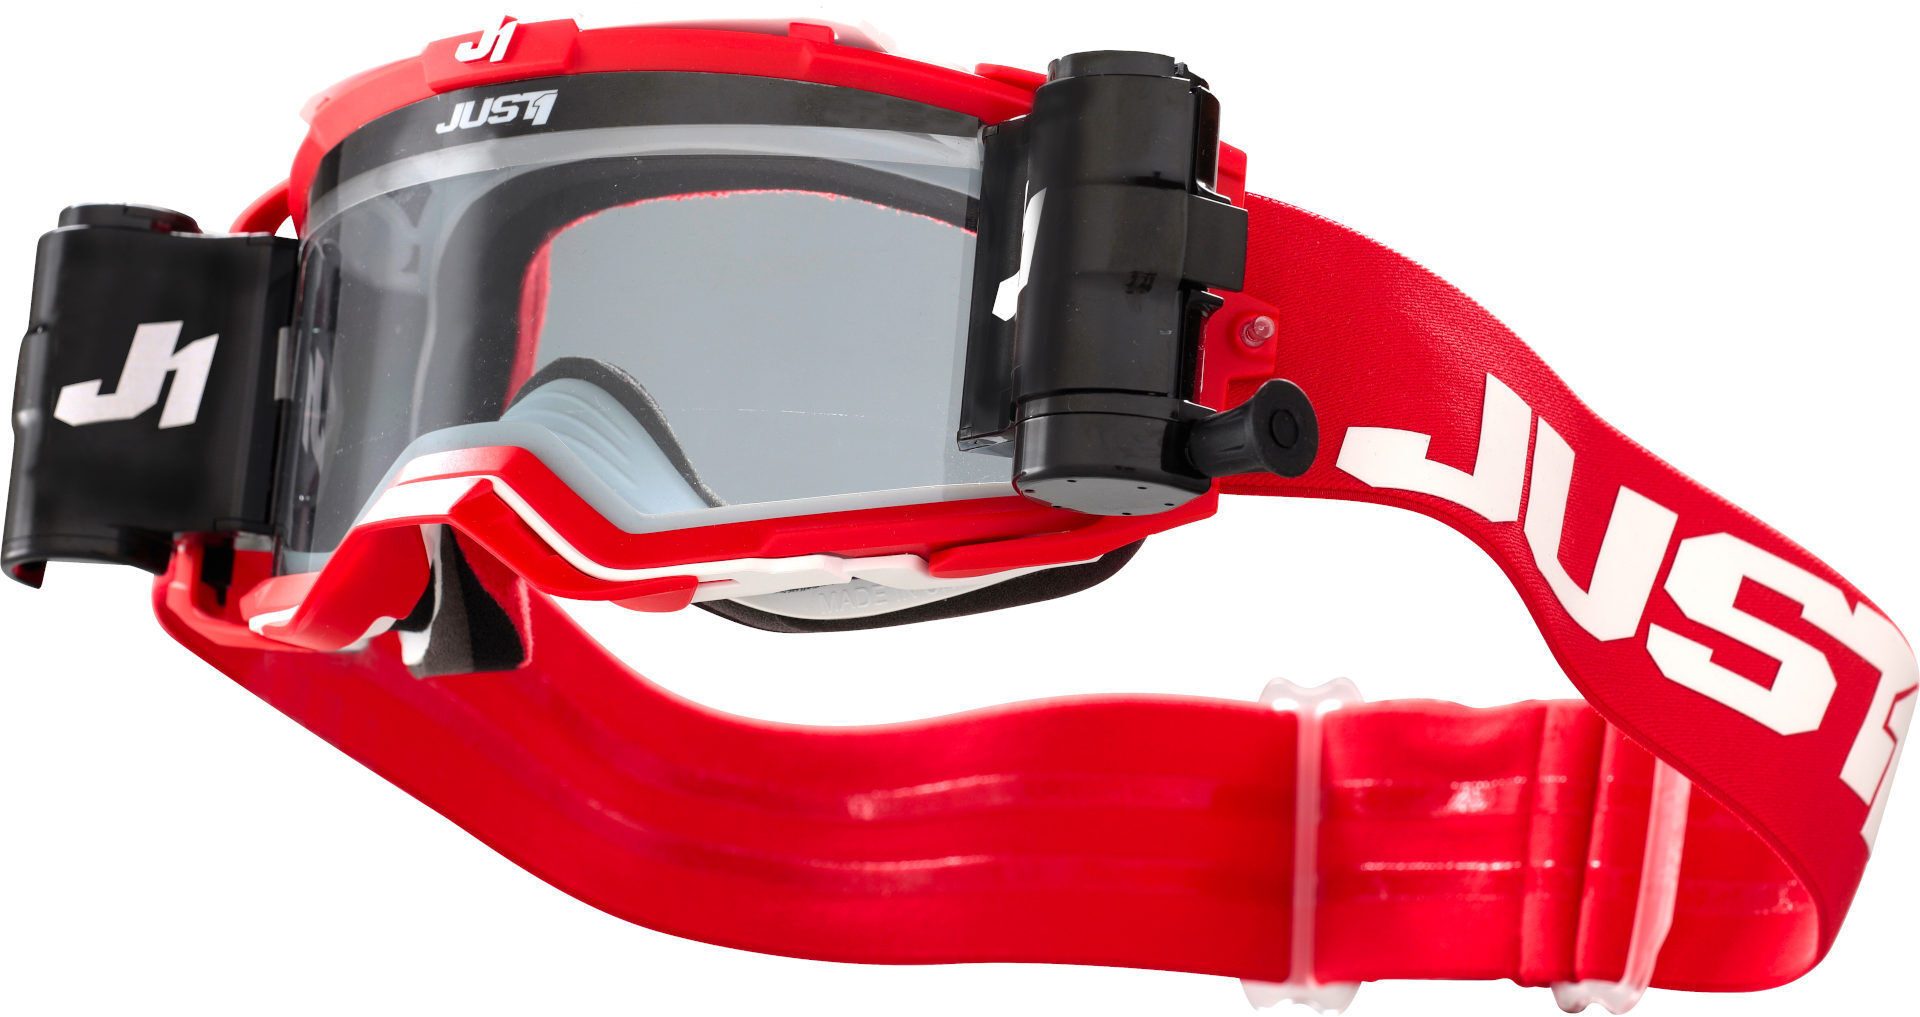 Just1 Nerve Plus Absolute Gafas de Motocross - Blanco Rojo (un tamaño)